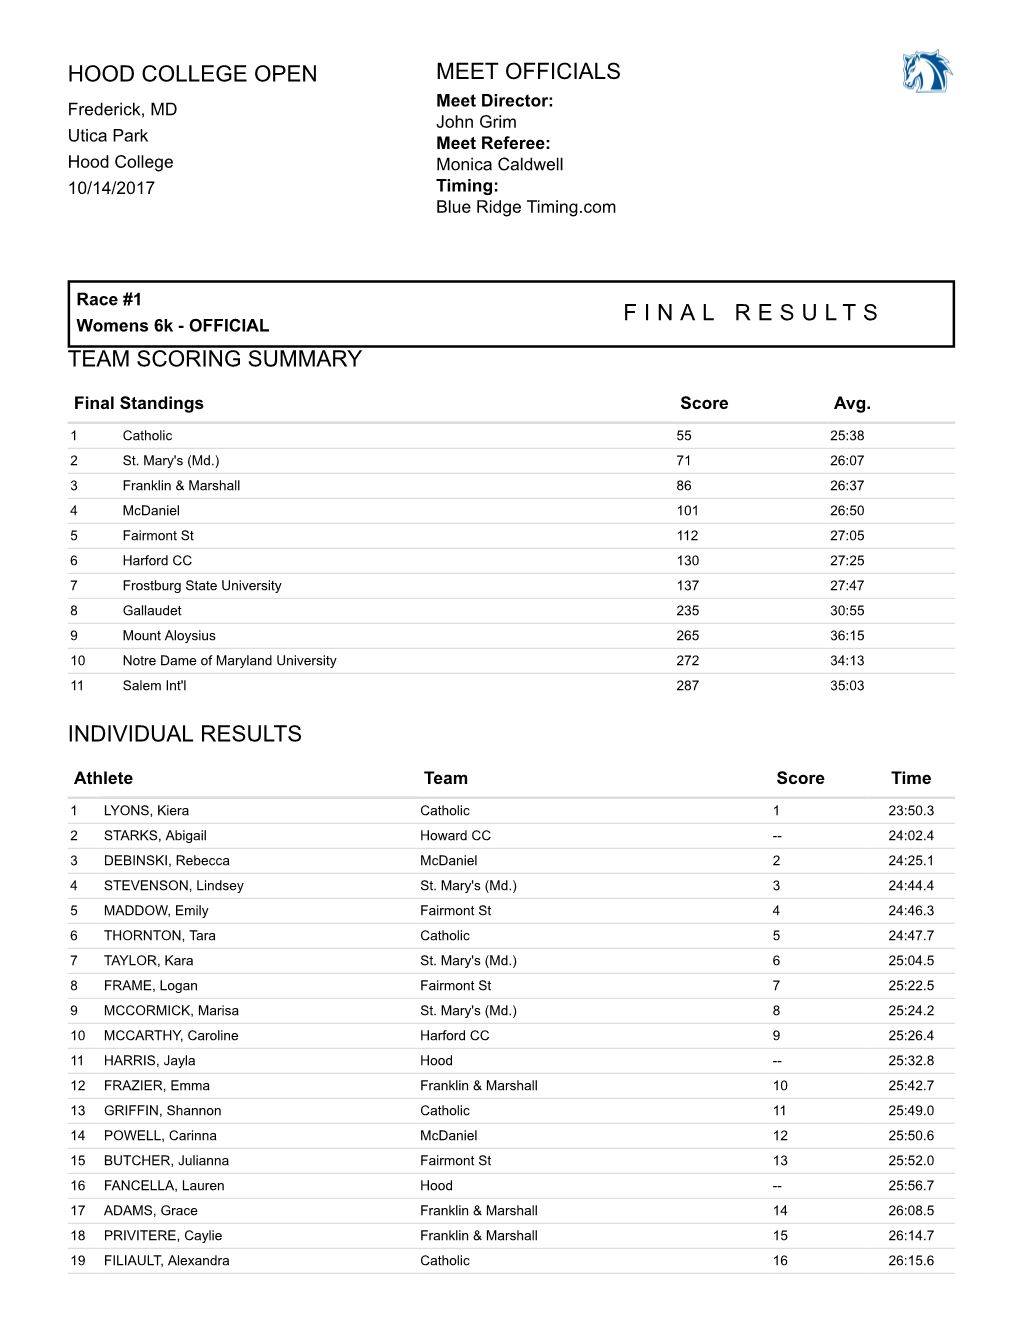 Team Scoring Summary Individual Results